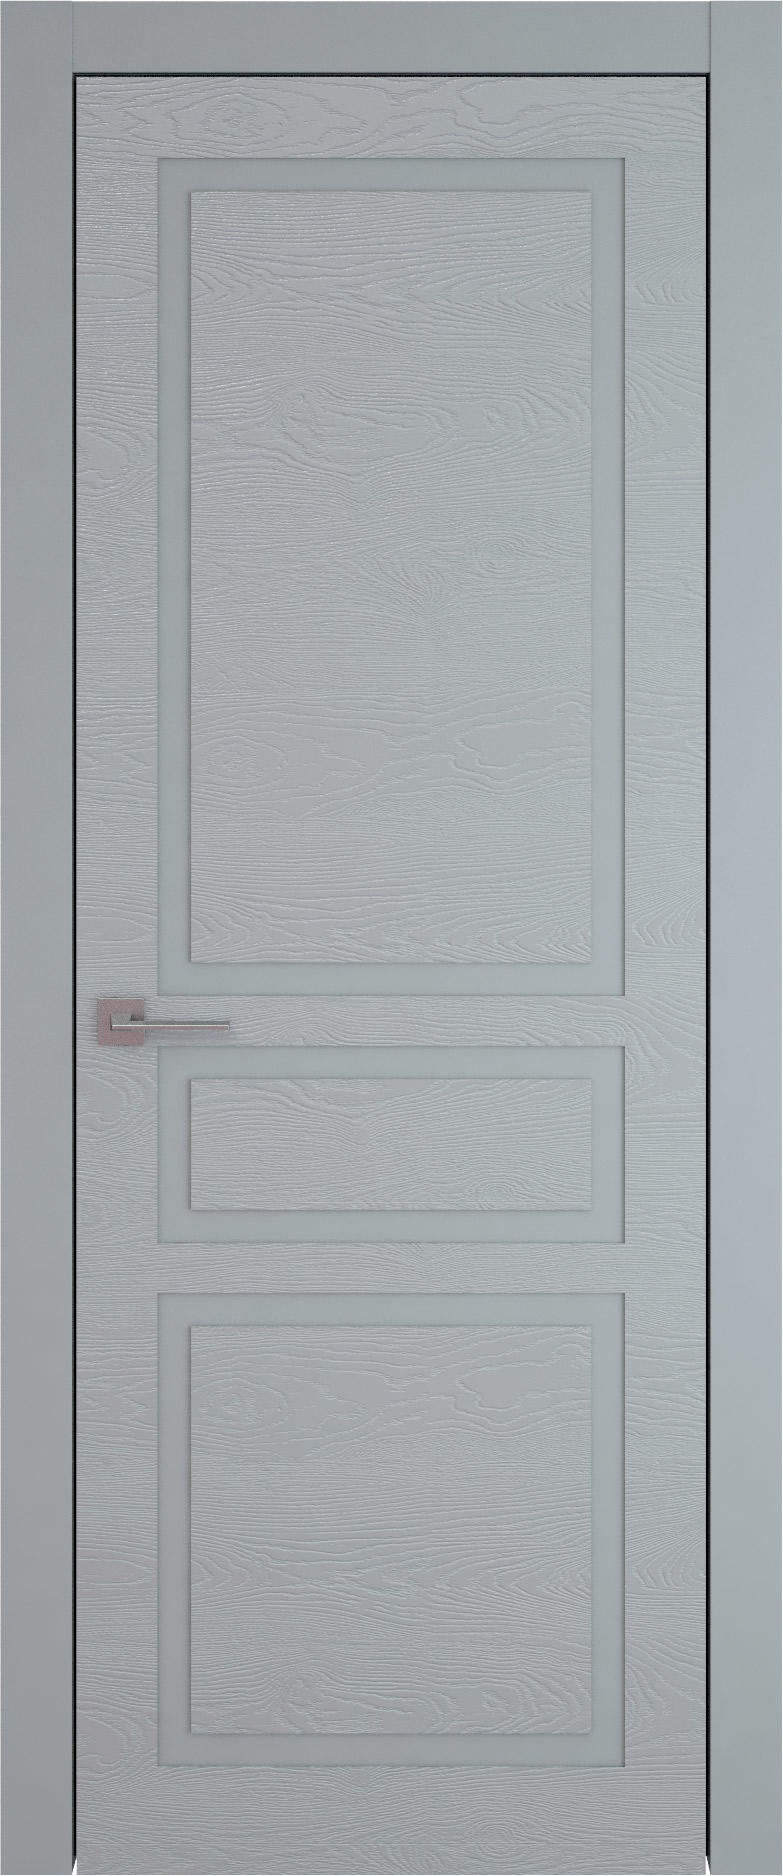 Tivoli Е-5 цвет - Серебристо-серая эмаль по шпону (RAL 7045) Без стекла (ДГ)